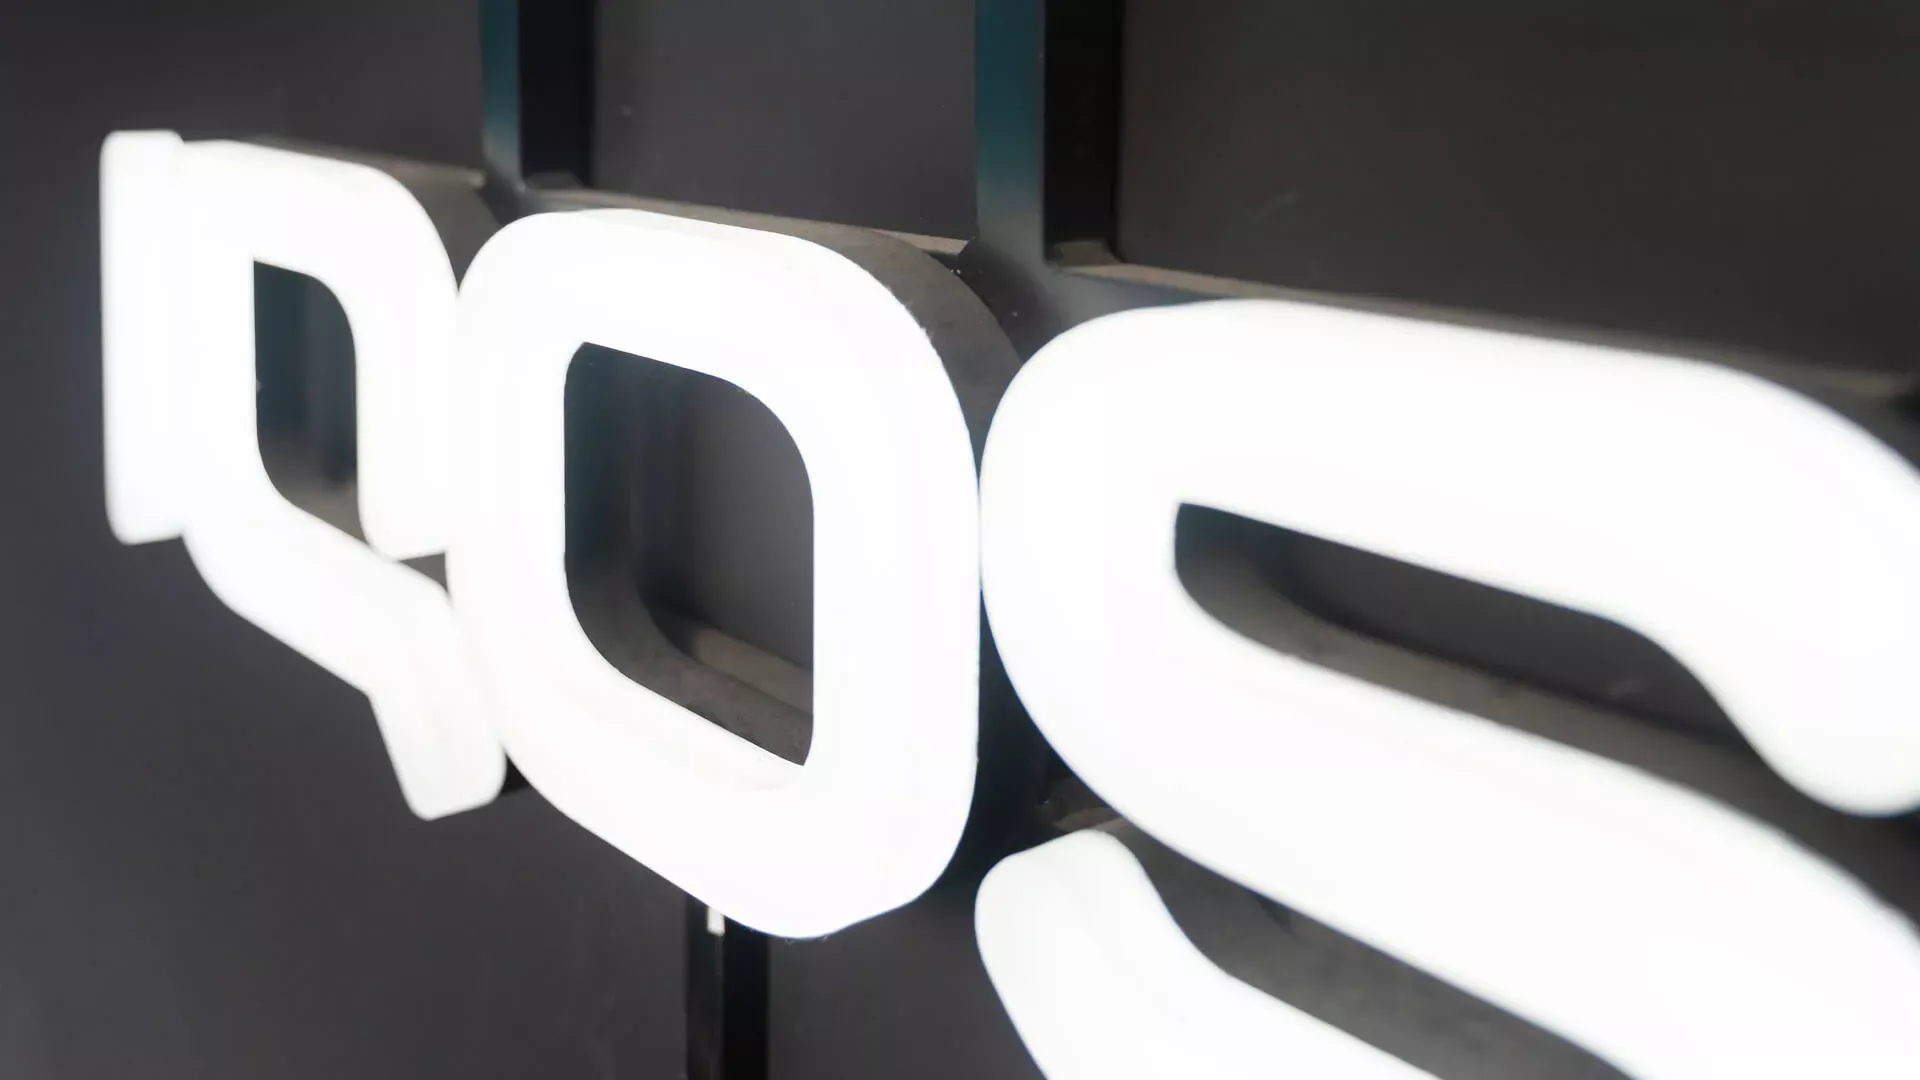 Iqos - IQOS inscription made of plexiglass, illuminated in white